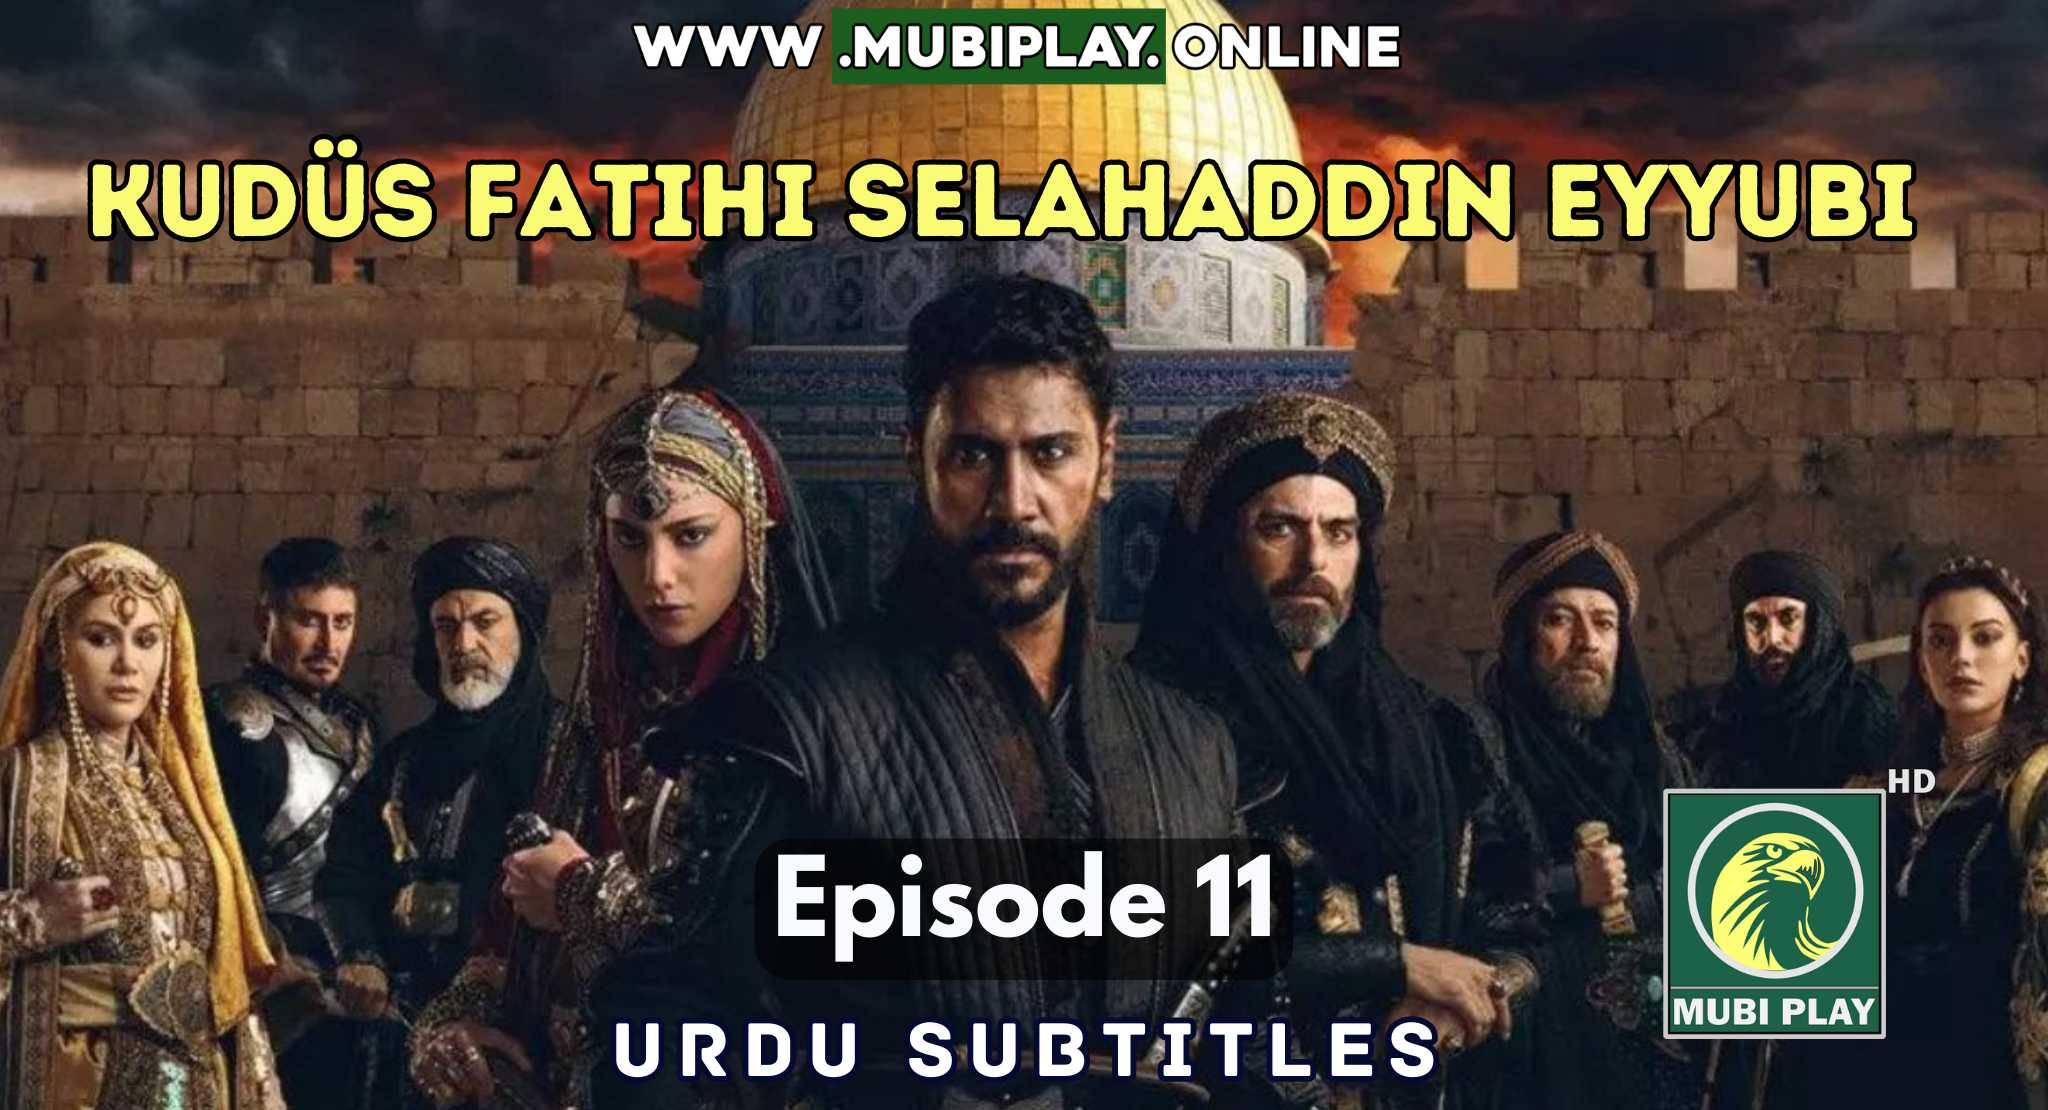 Kudüs Fatihi Selahaddin Eyyubi Episode 11 with Urdu Subtitles by Mubi Play